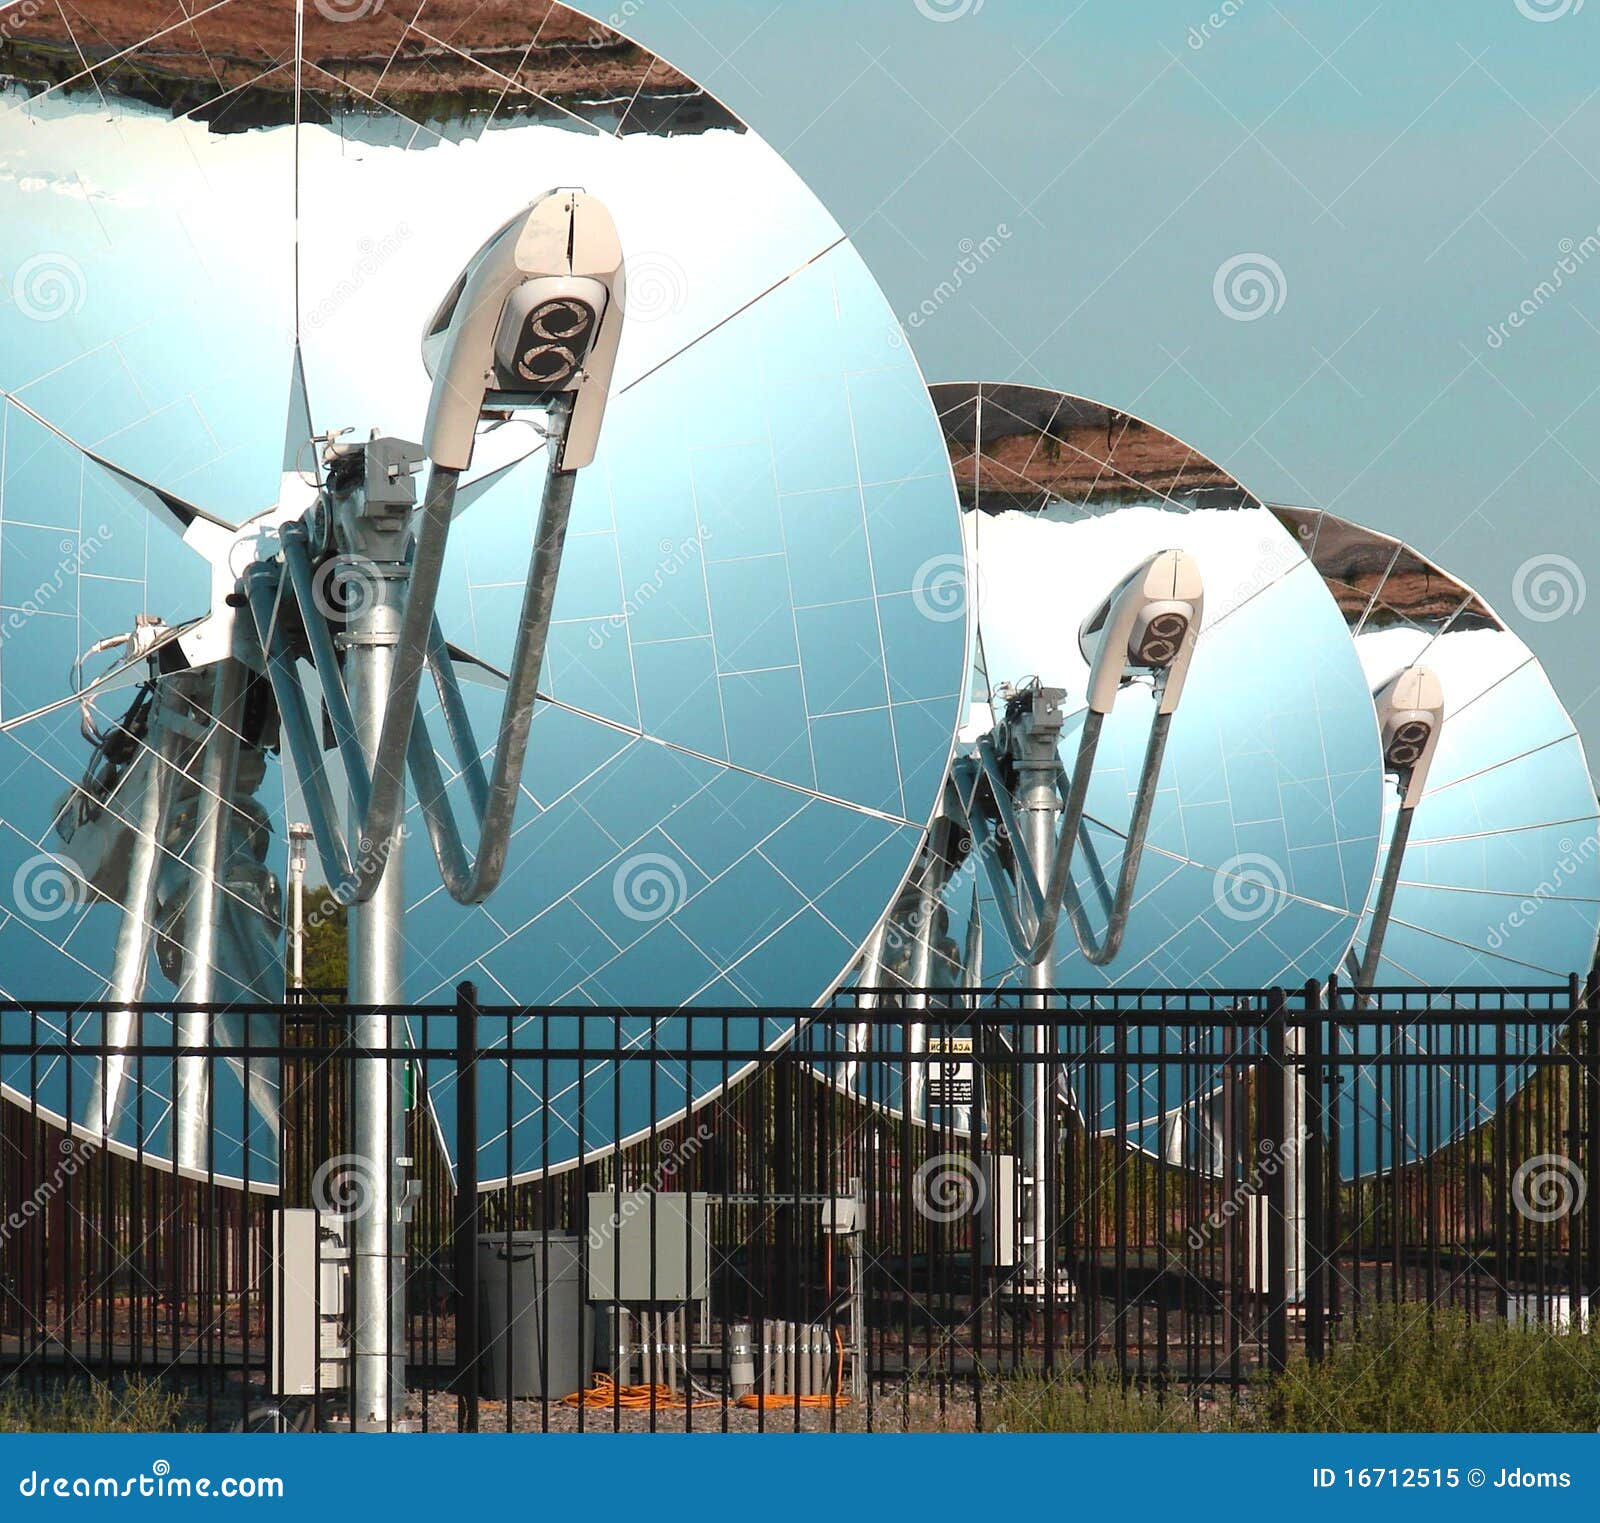 parabolic dish solar collectors